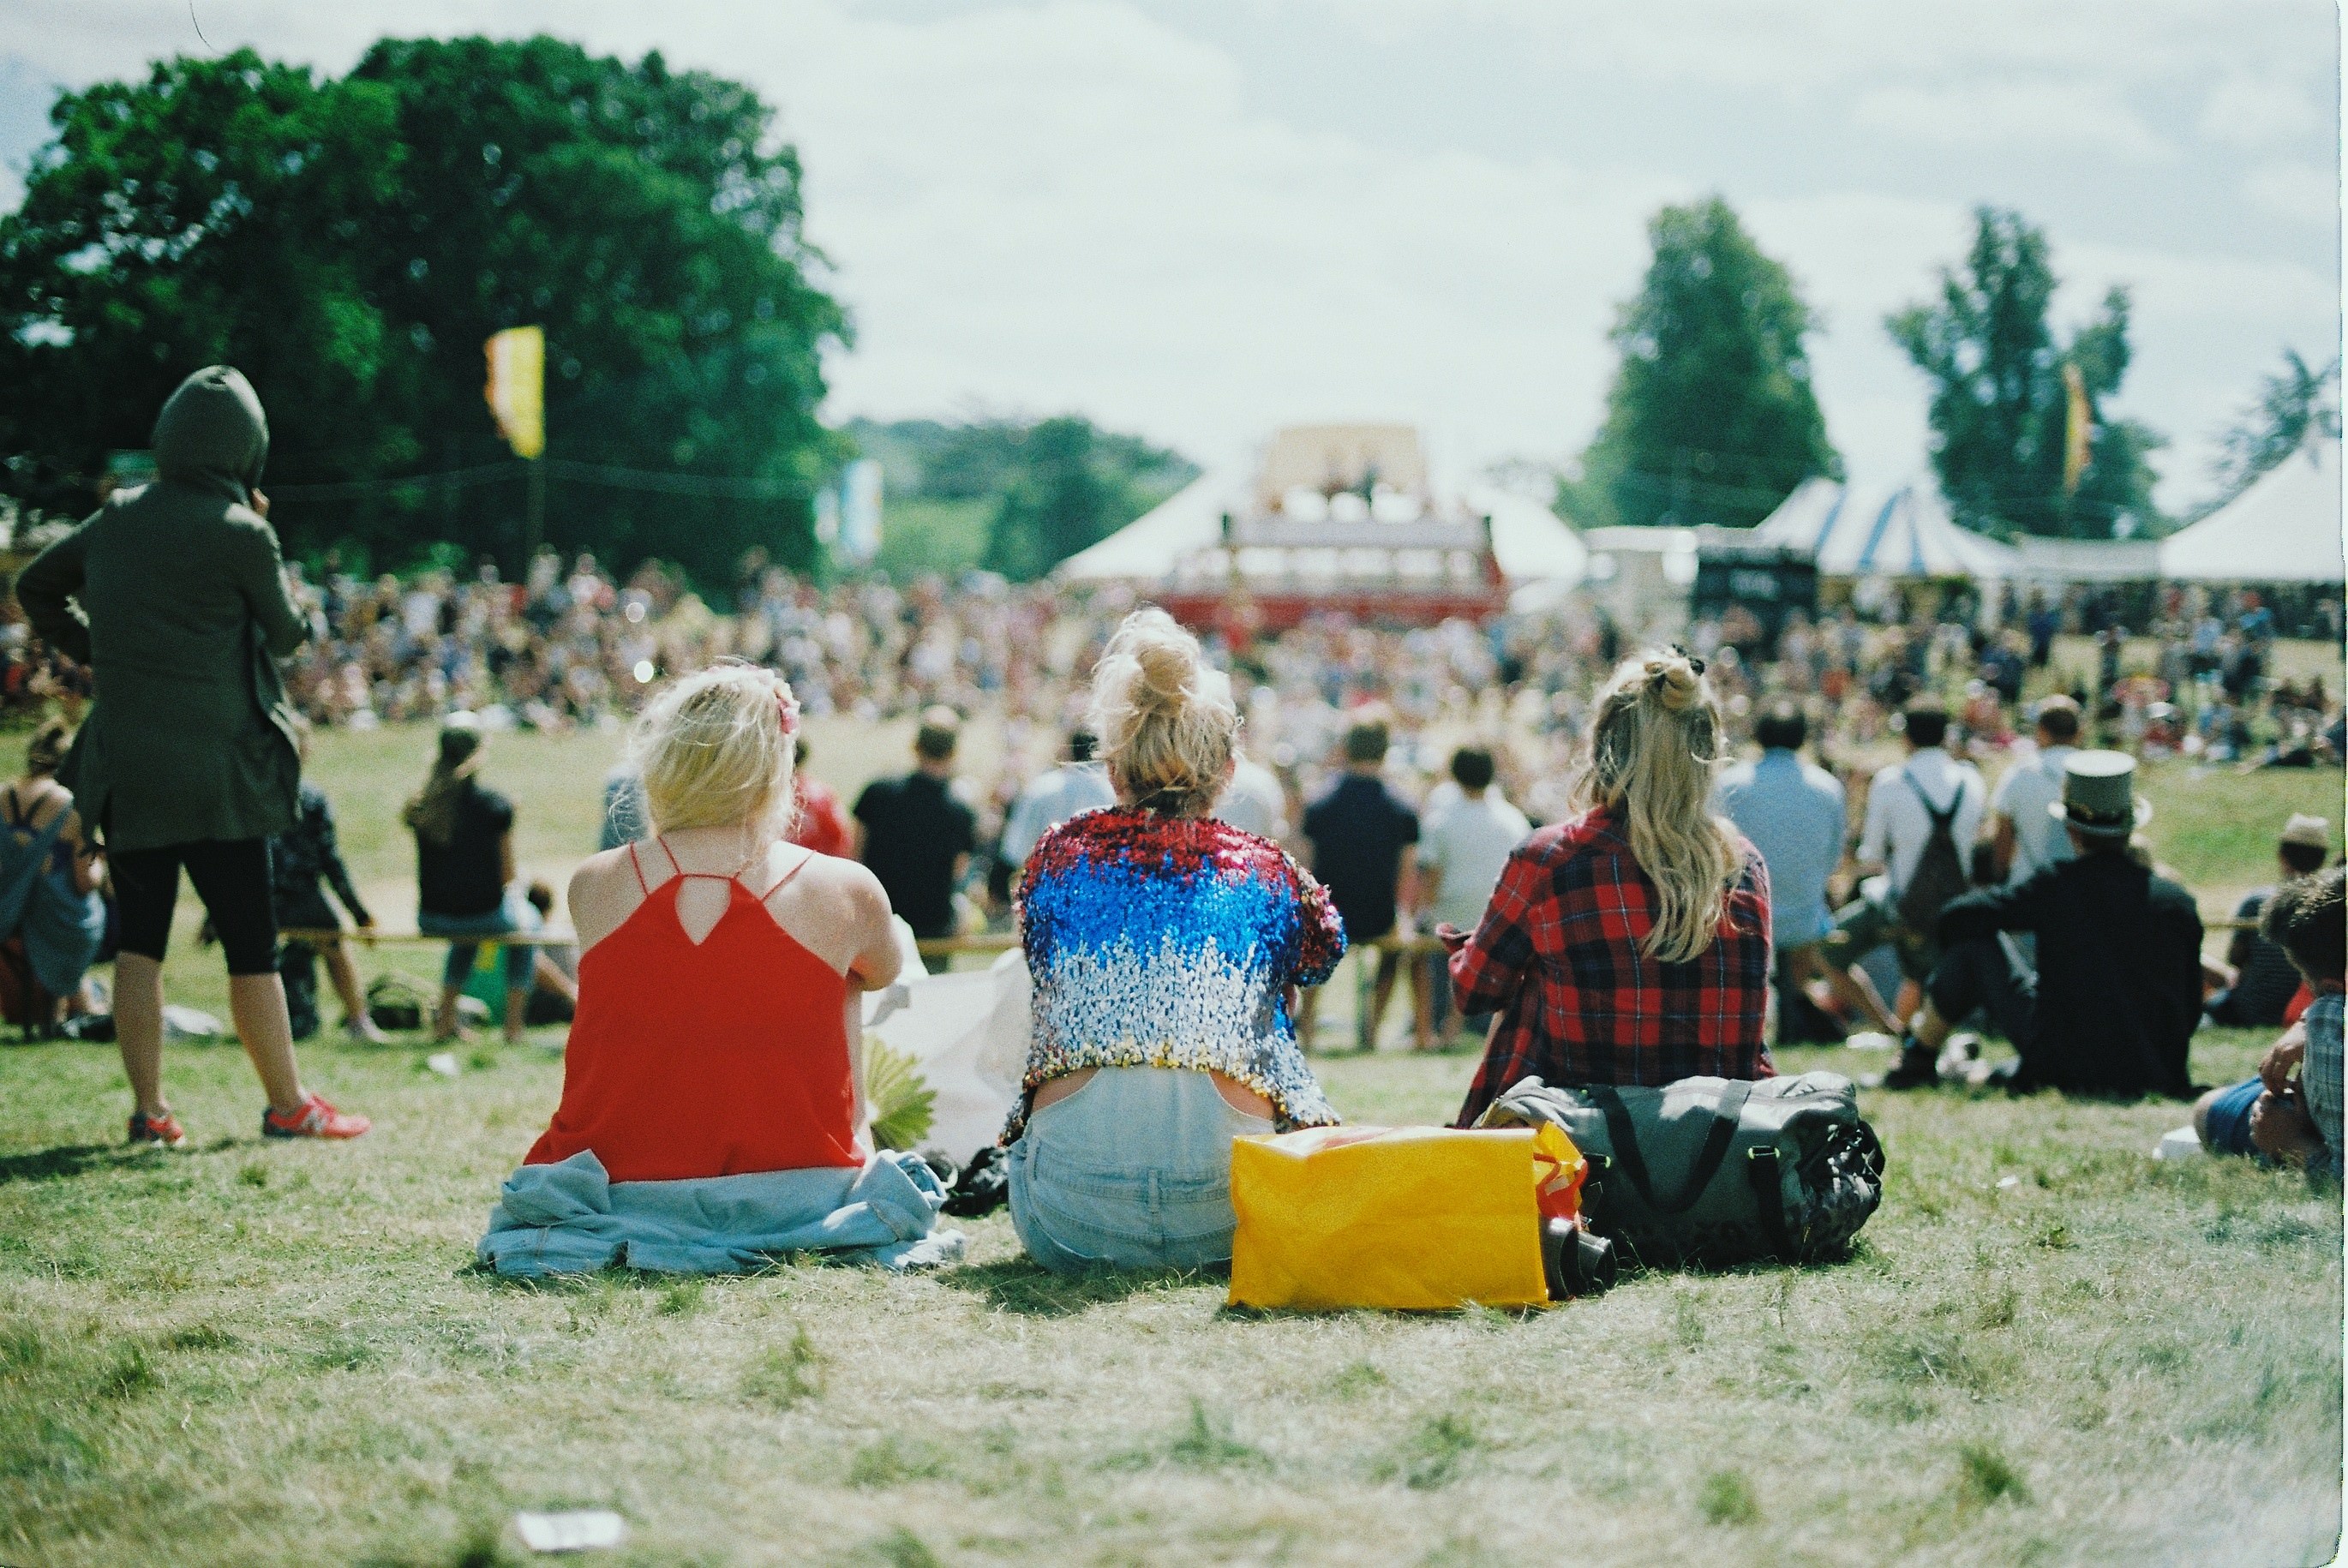 Festival insurance quote - Shows a music festival crowd